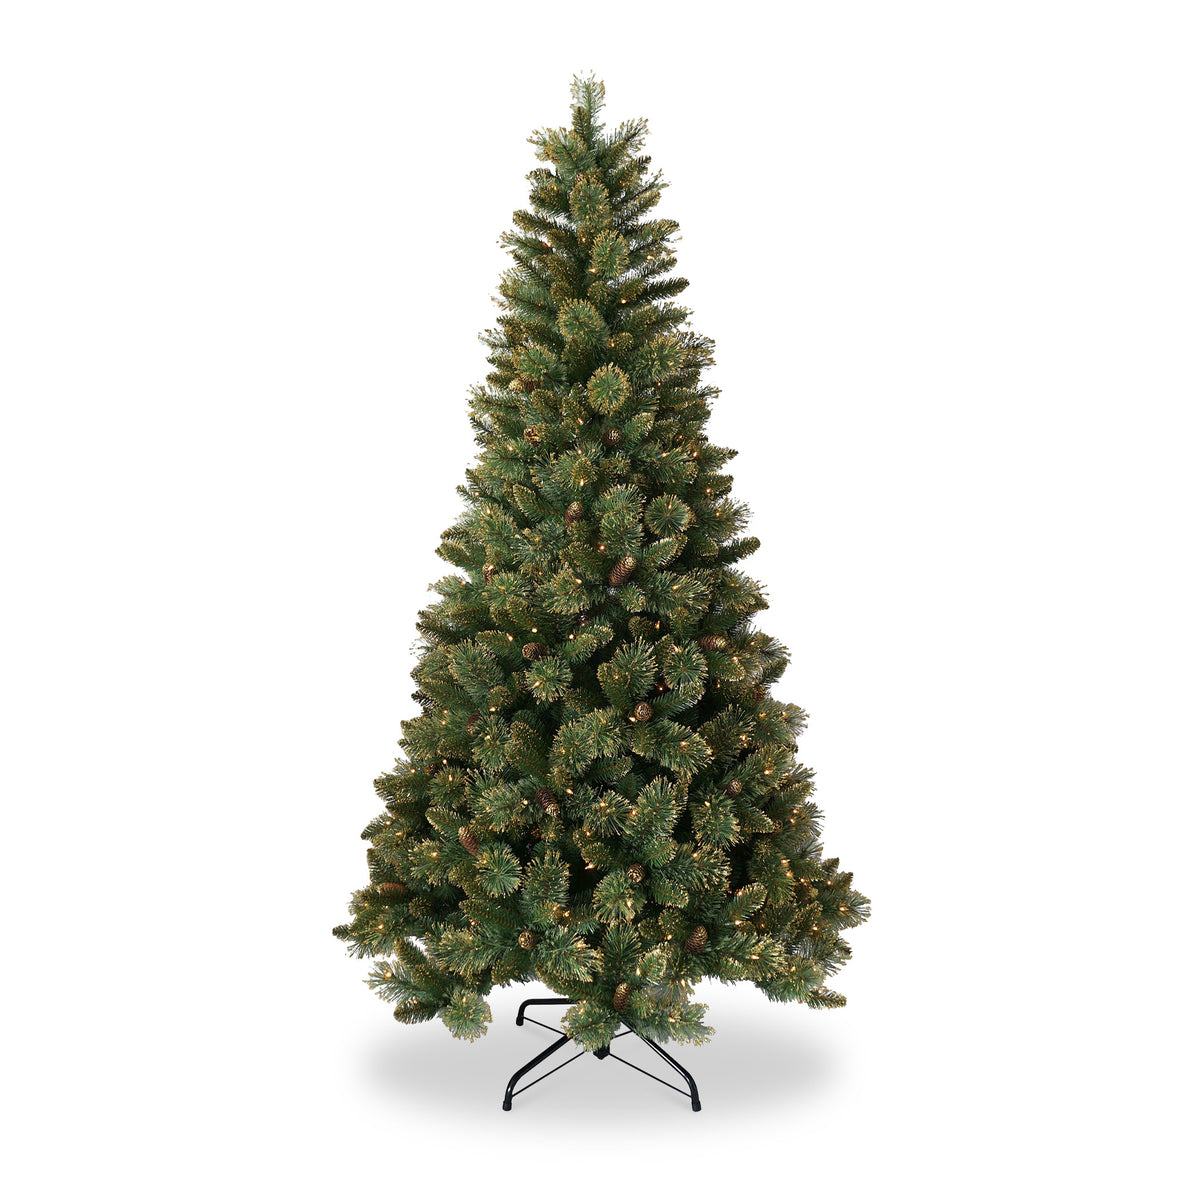 Shimmery Golden Warm White LED Bristle Pine Christmas Tree from Roseland